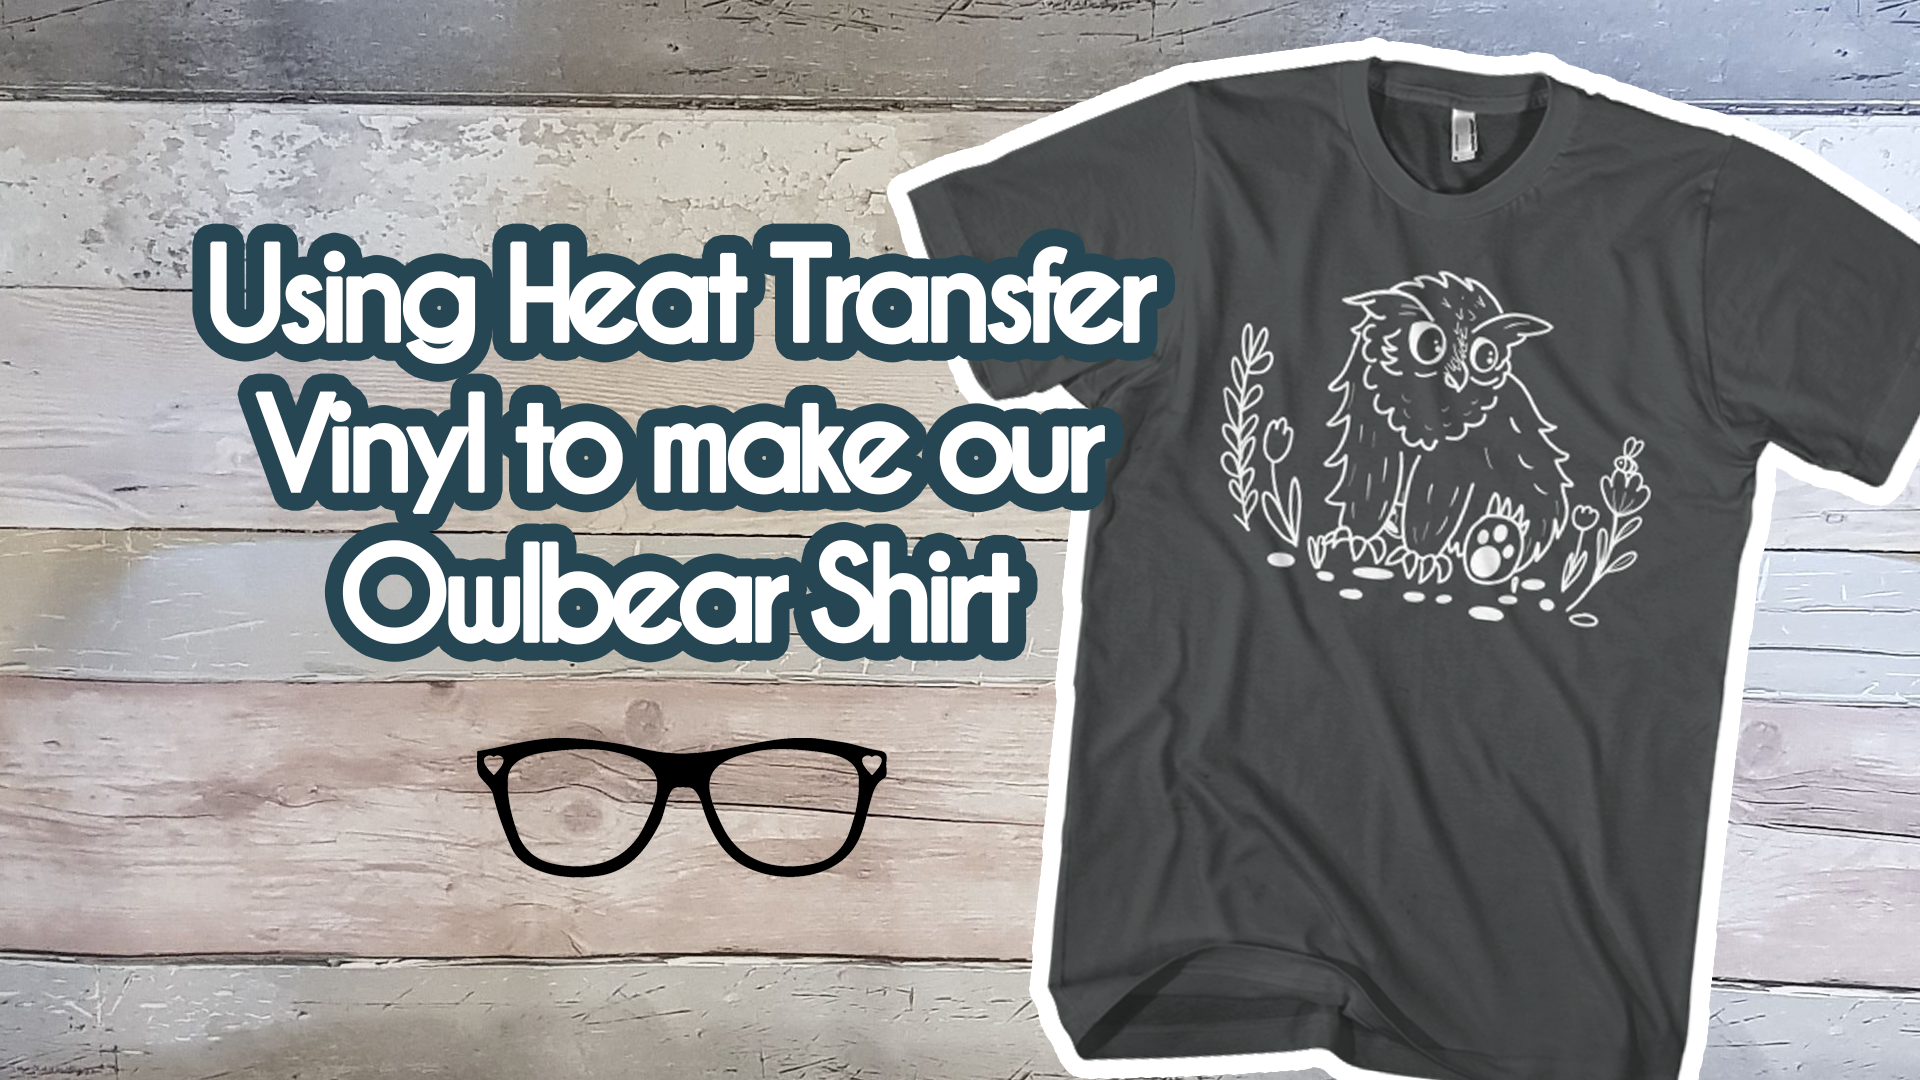 Load video: Using Heat Transfer to make an Owlbear T-shirt